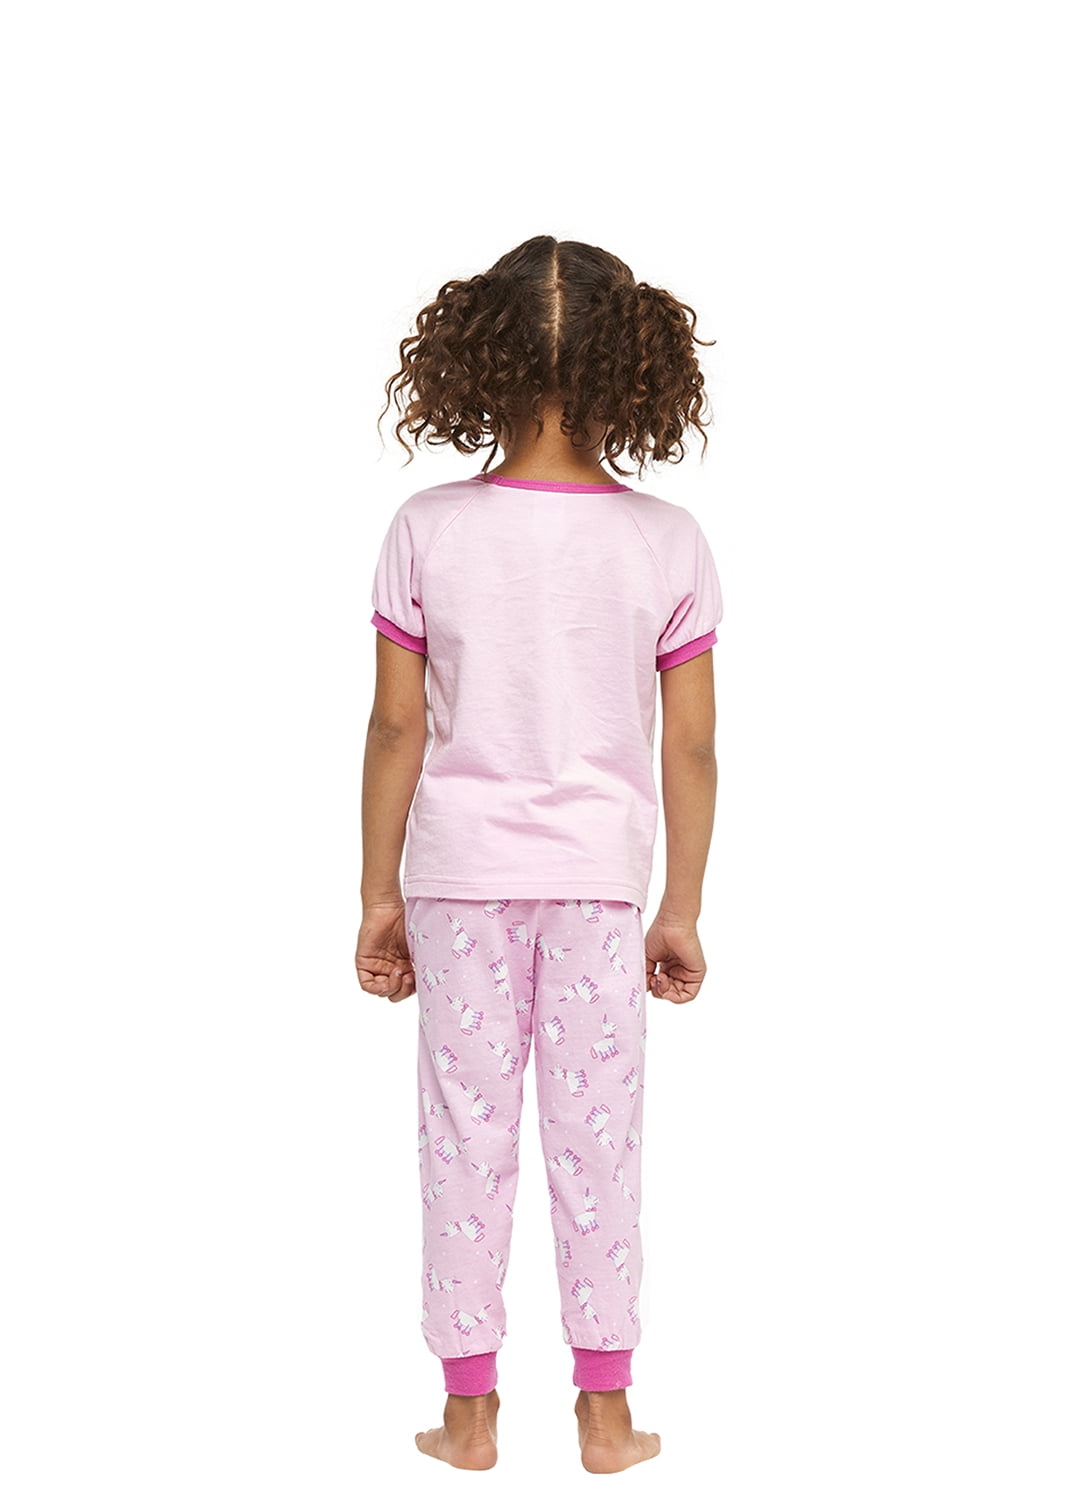 Peppa Pig Pajamas for Toddler Girls 2-Piece Short Sleeve Shirt Pants PJ Set 3T 